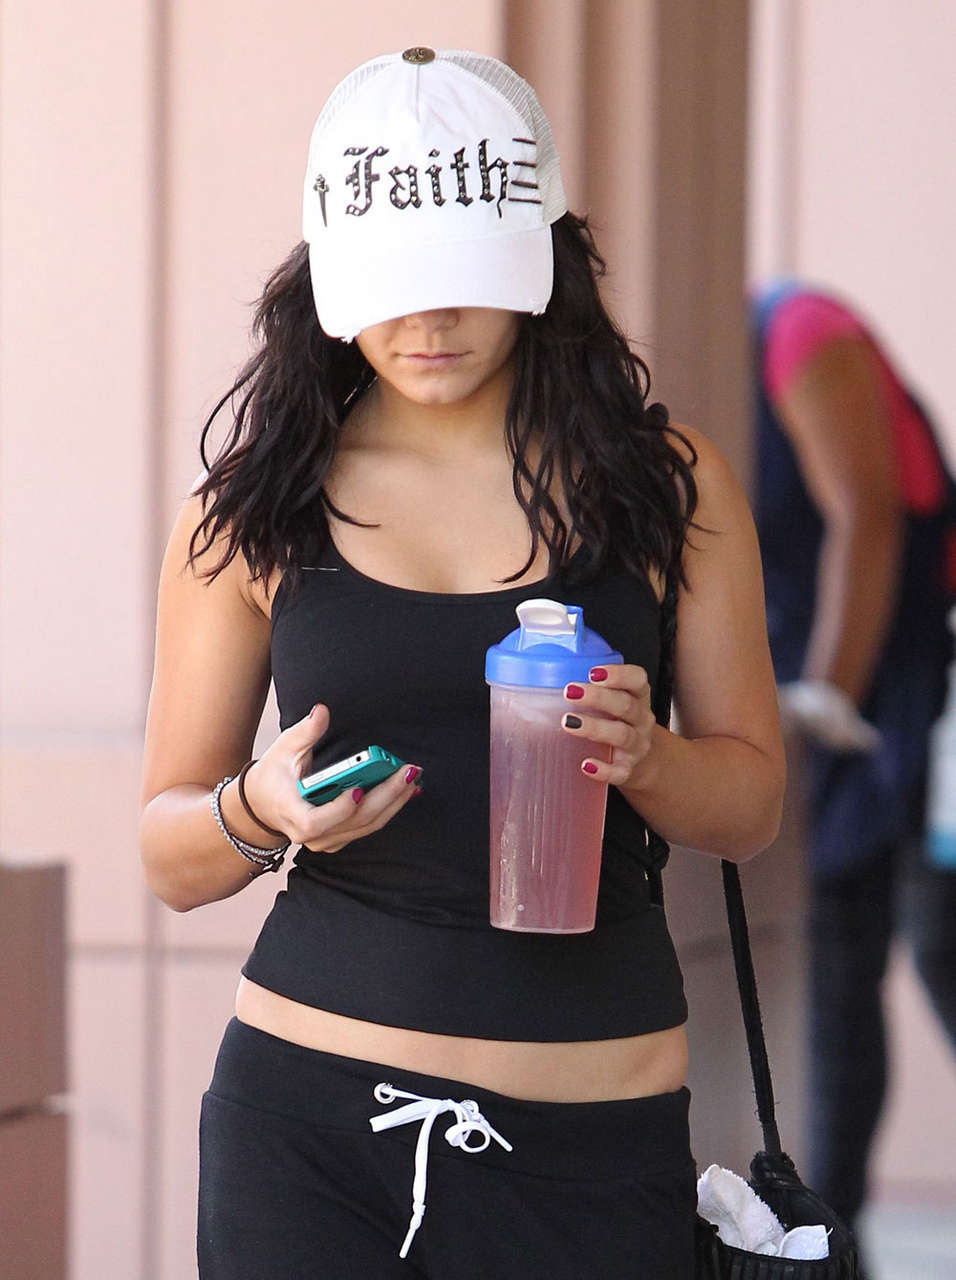 Vanessa Hudgens Heading To Gym Los Angeles